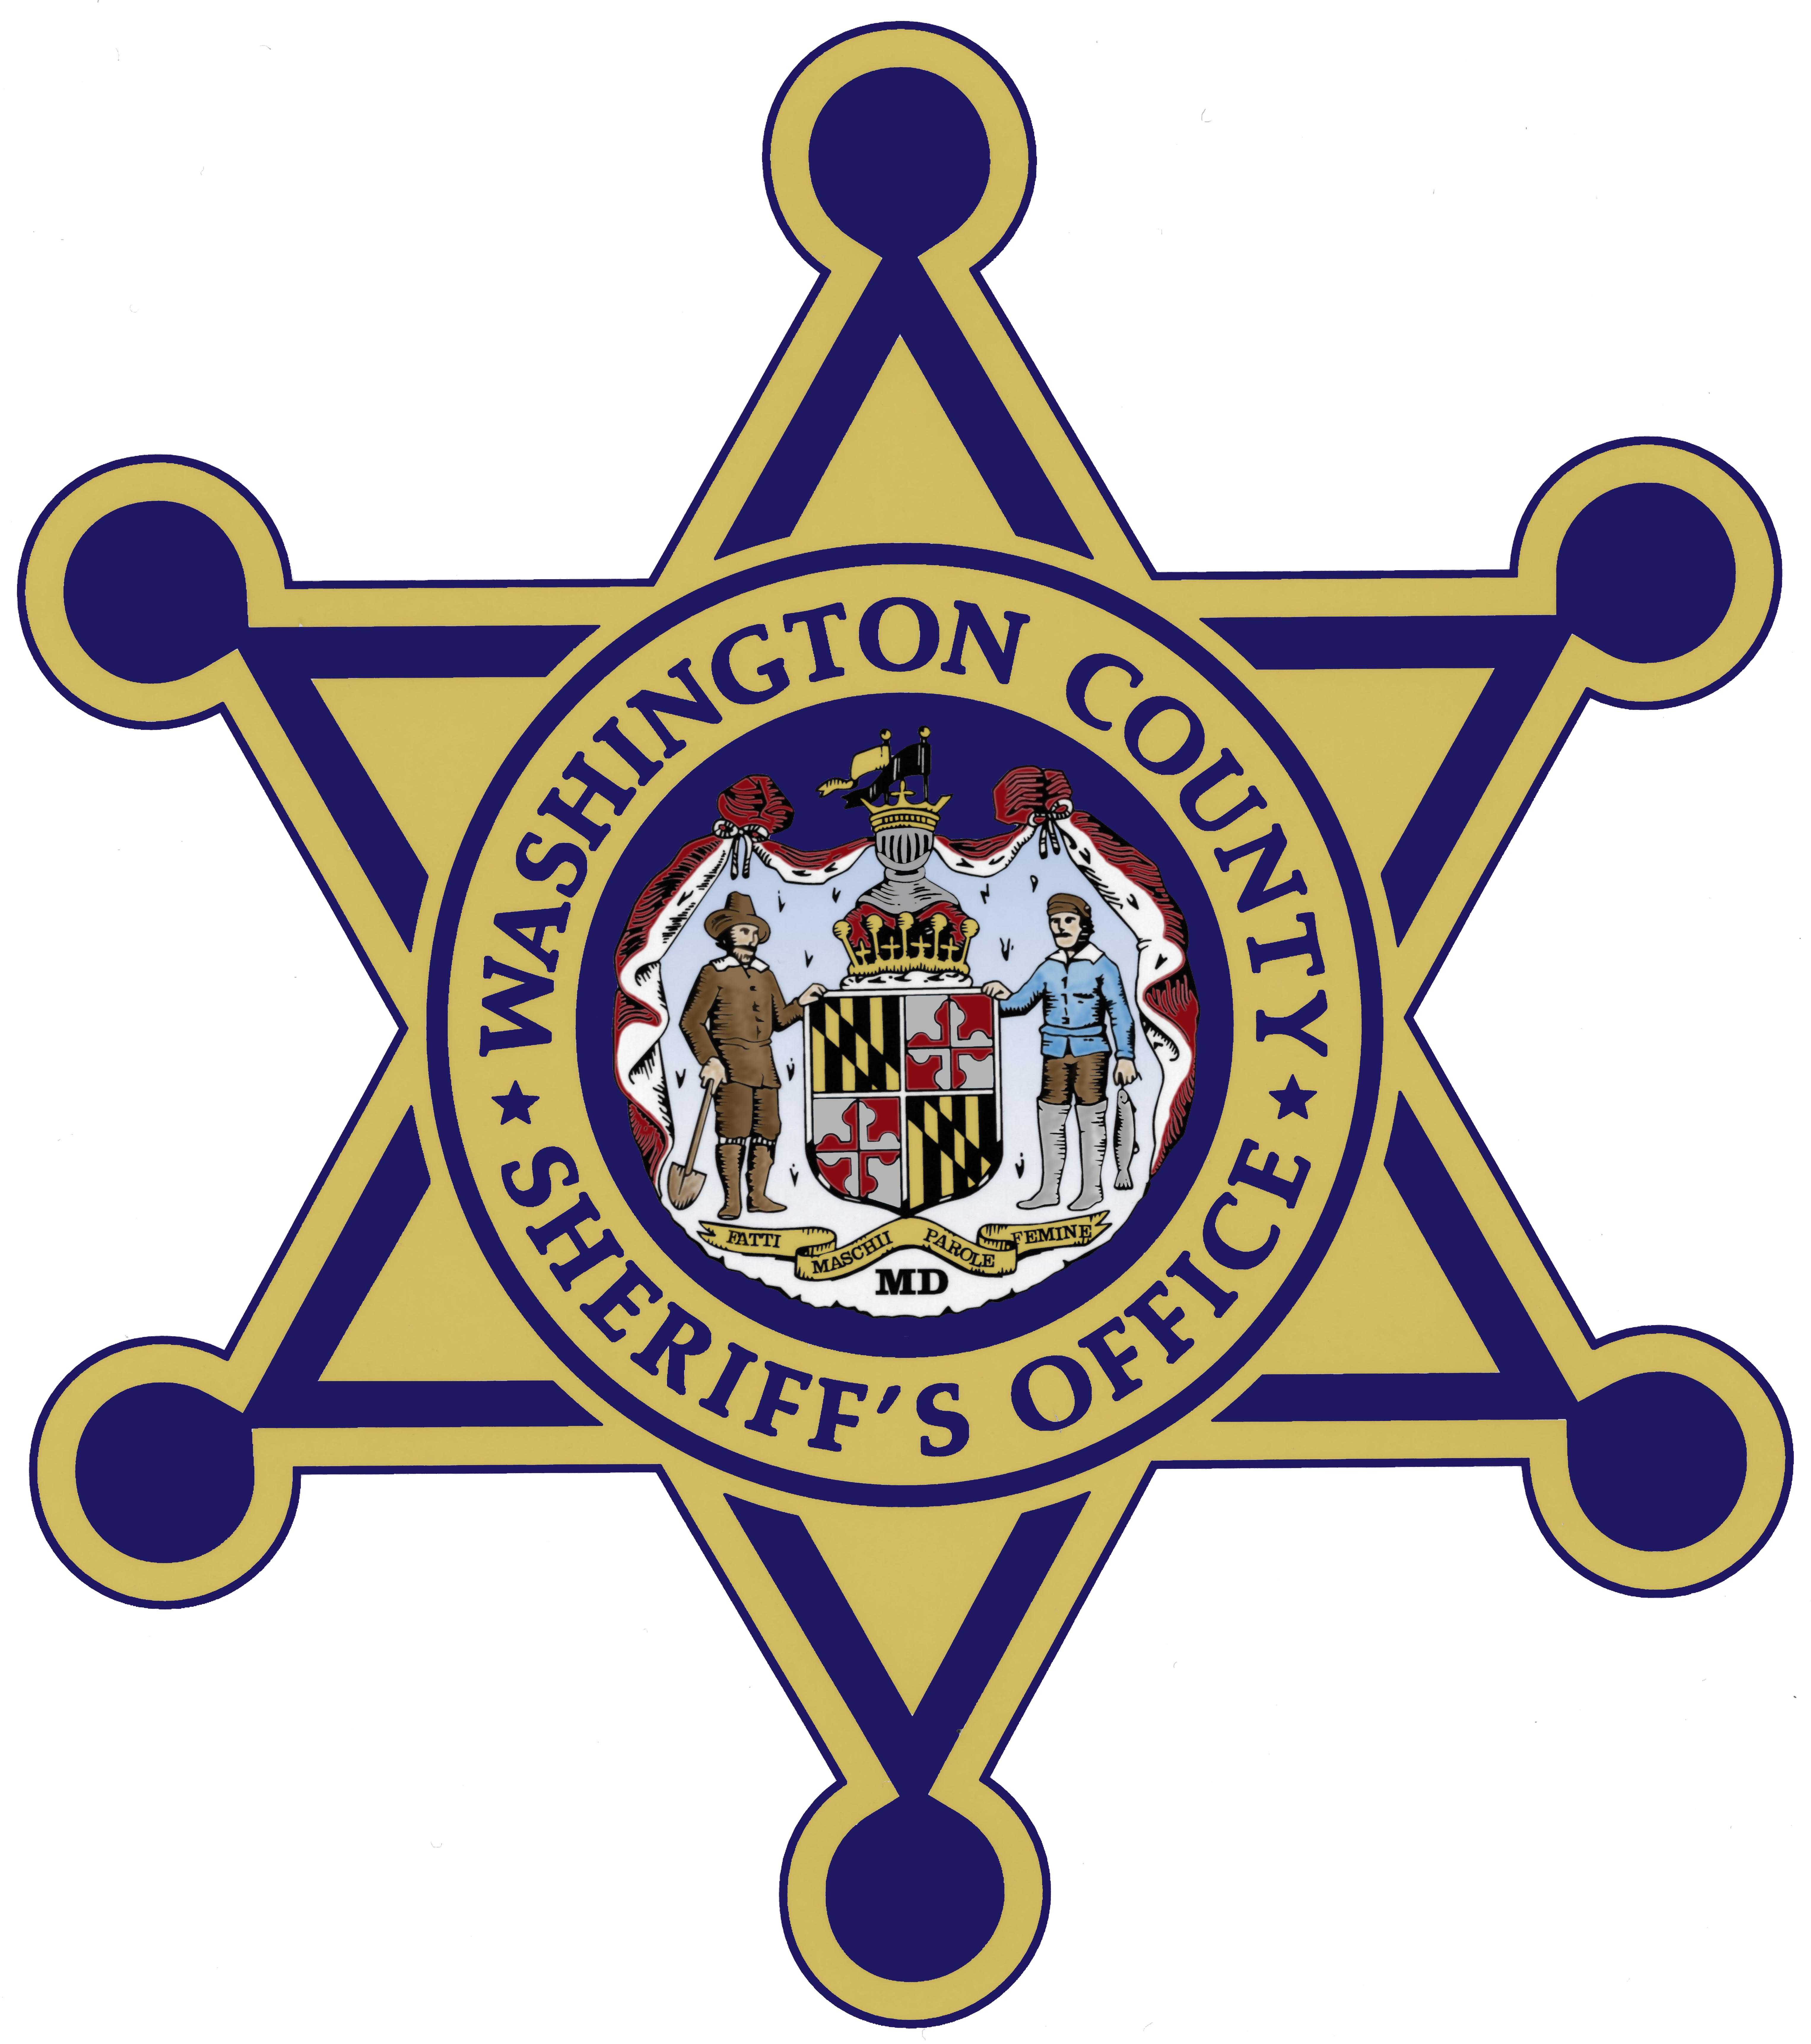   Washington County Sheriff's Office